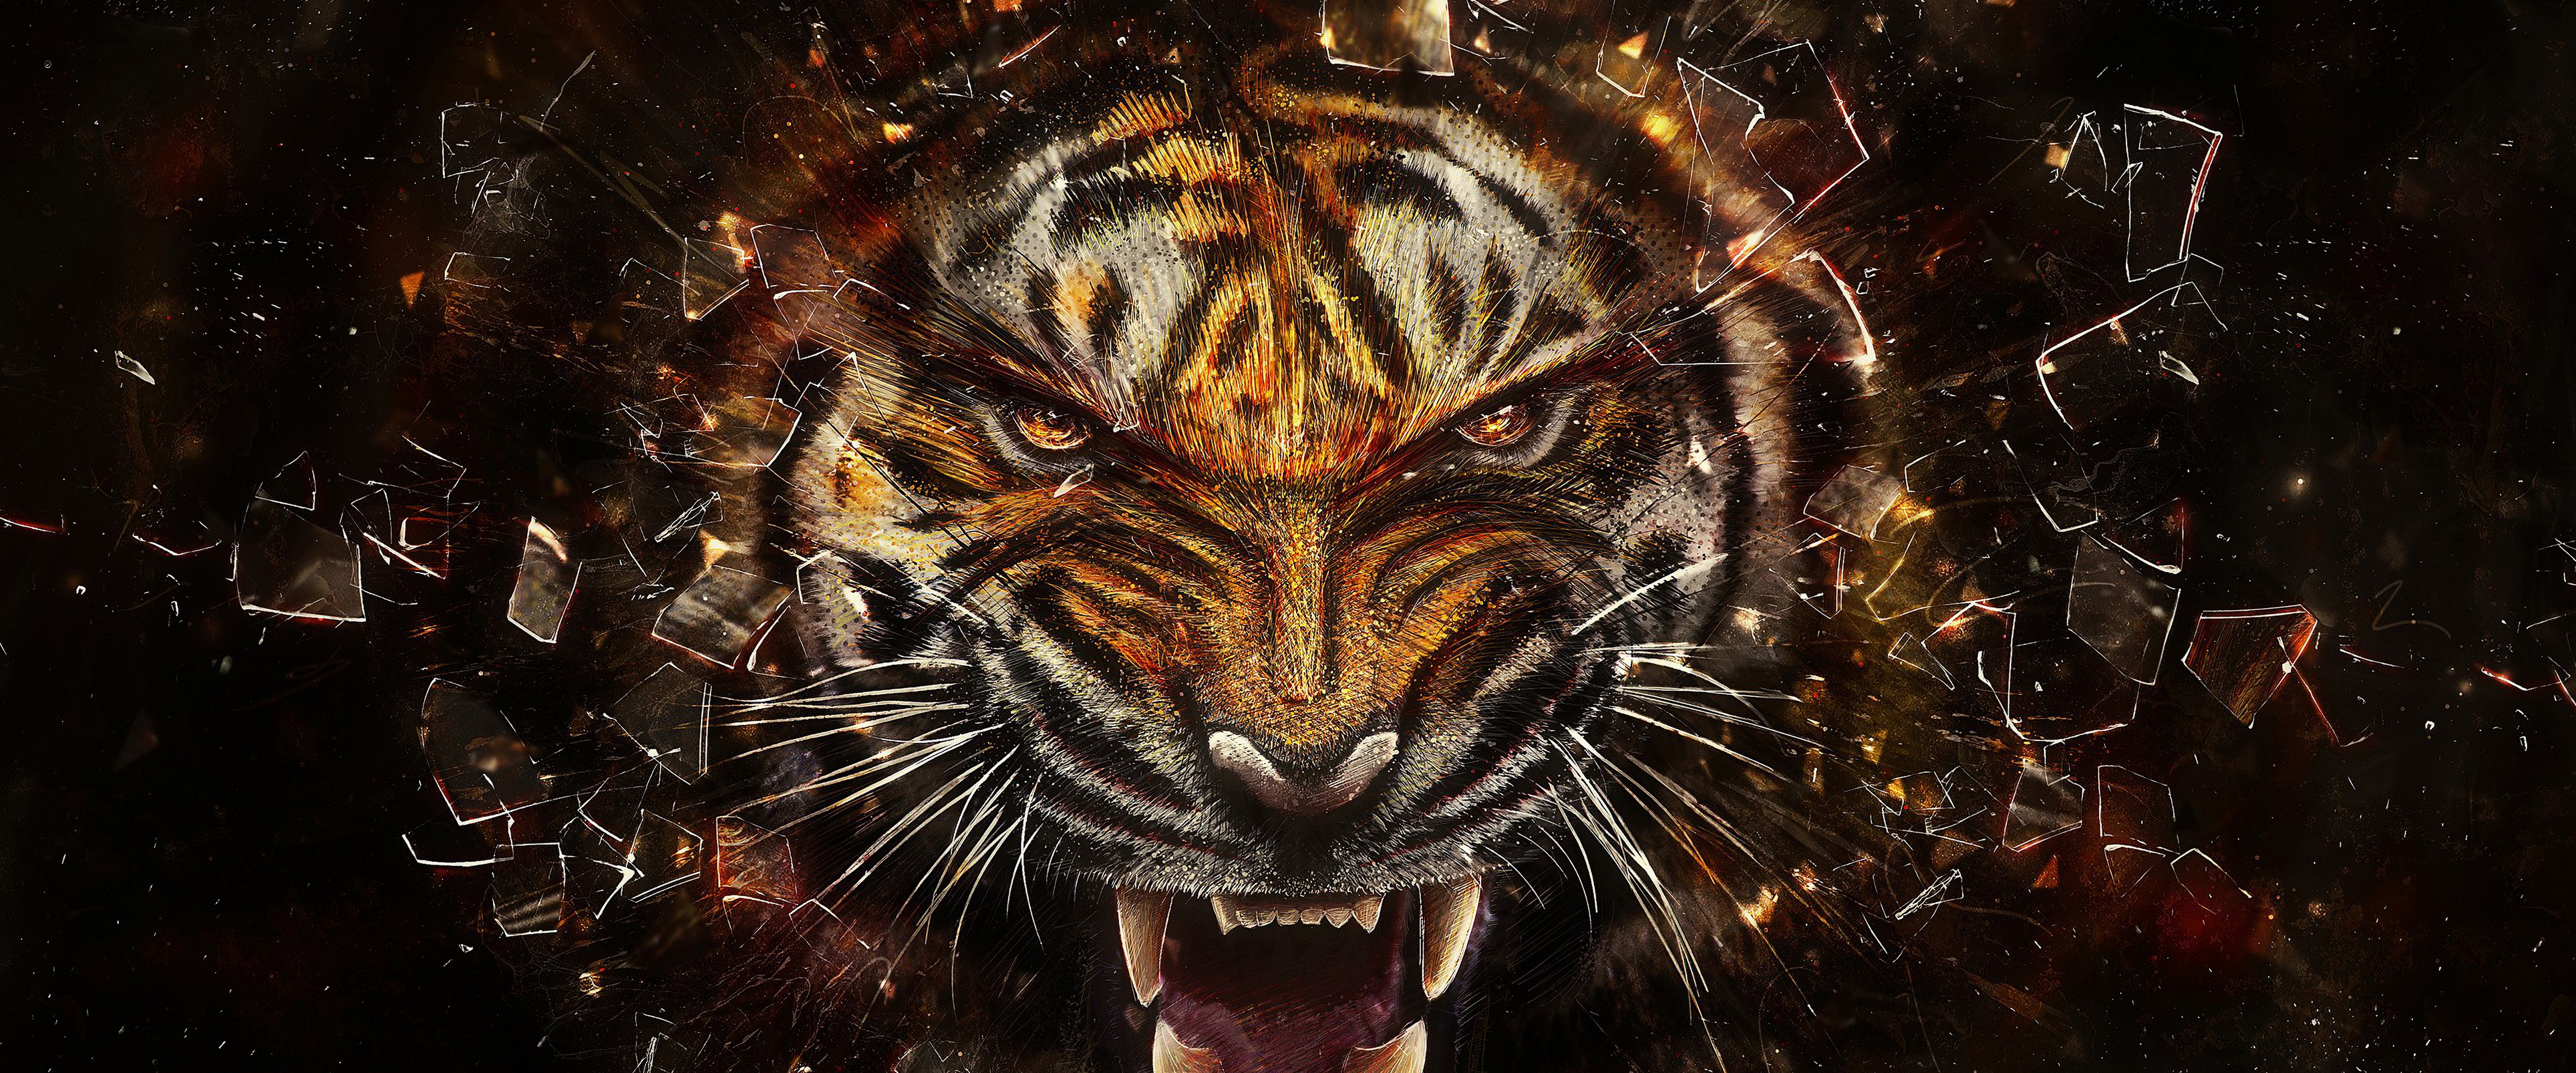 Tiger Roaring Wallpapers